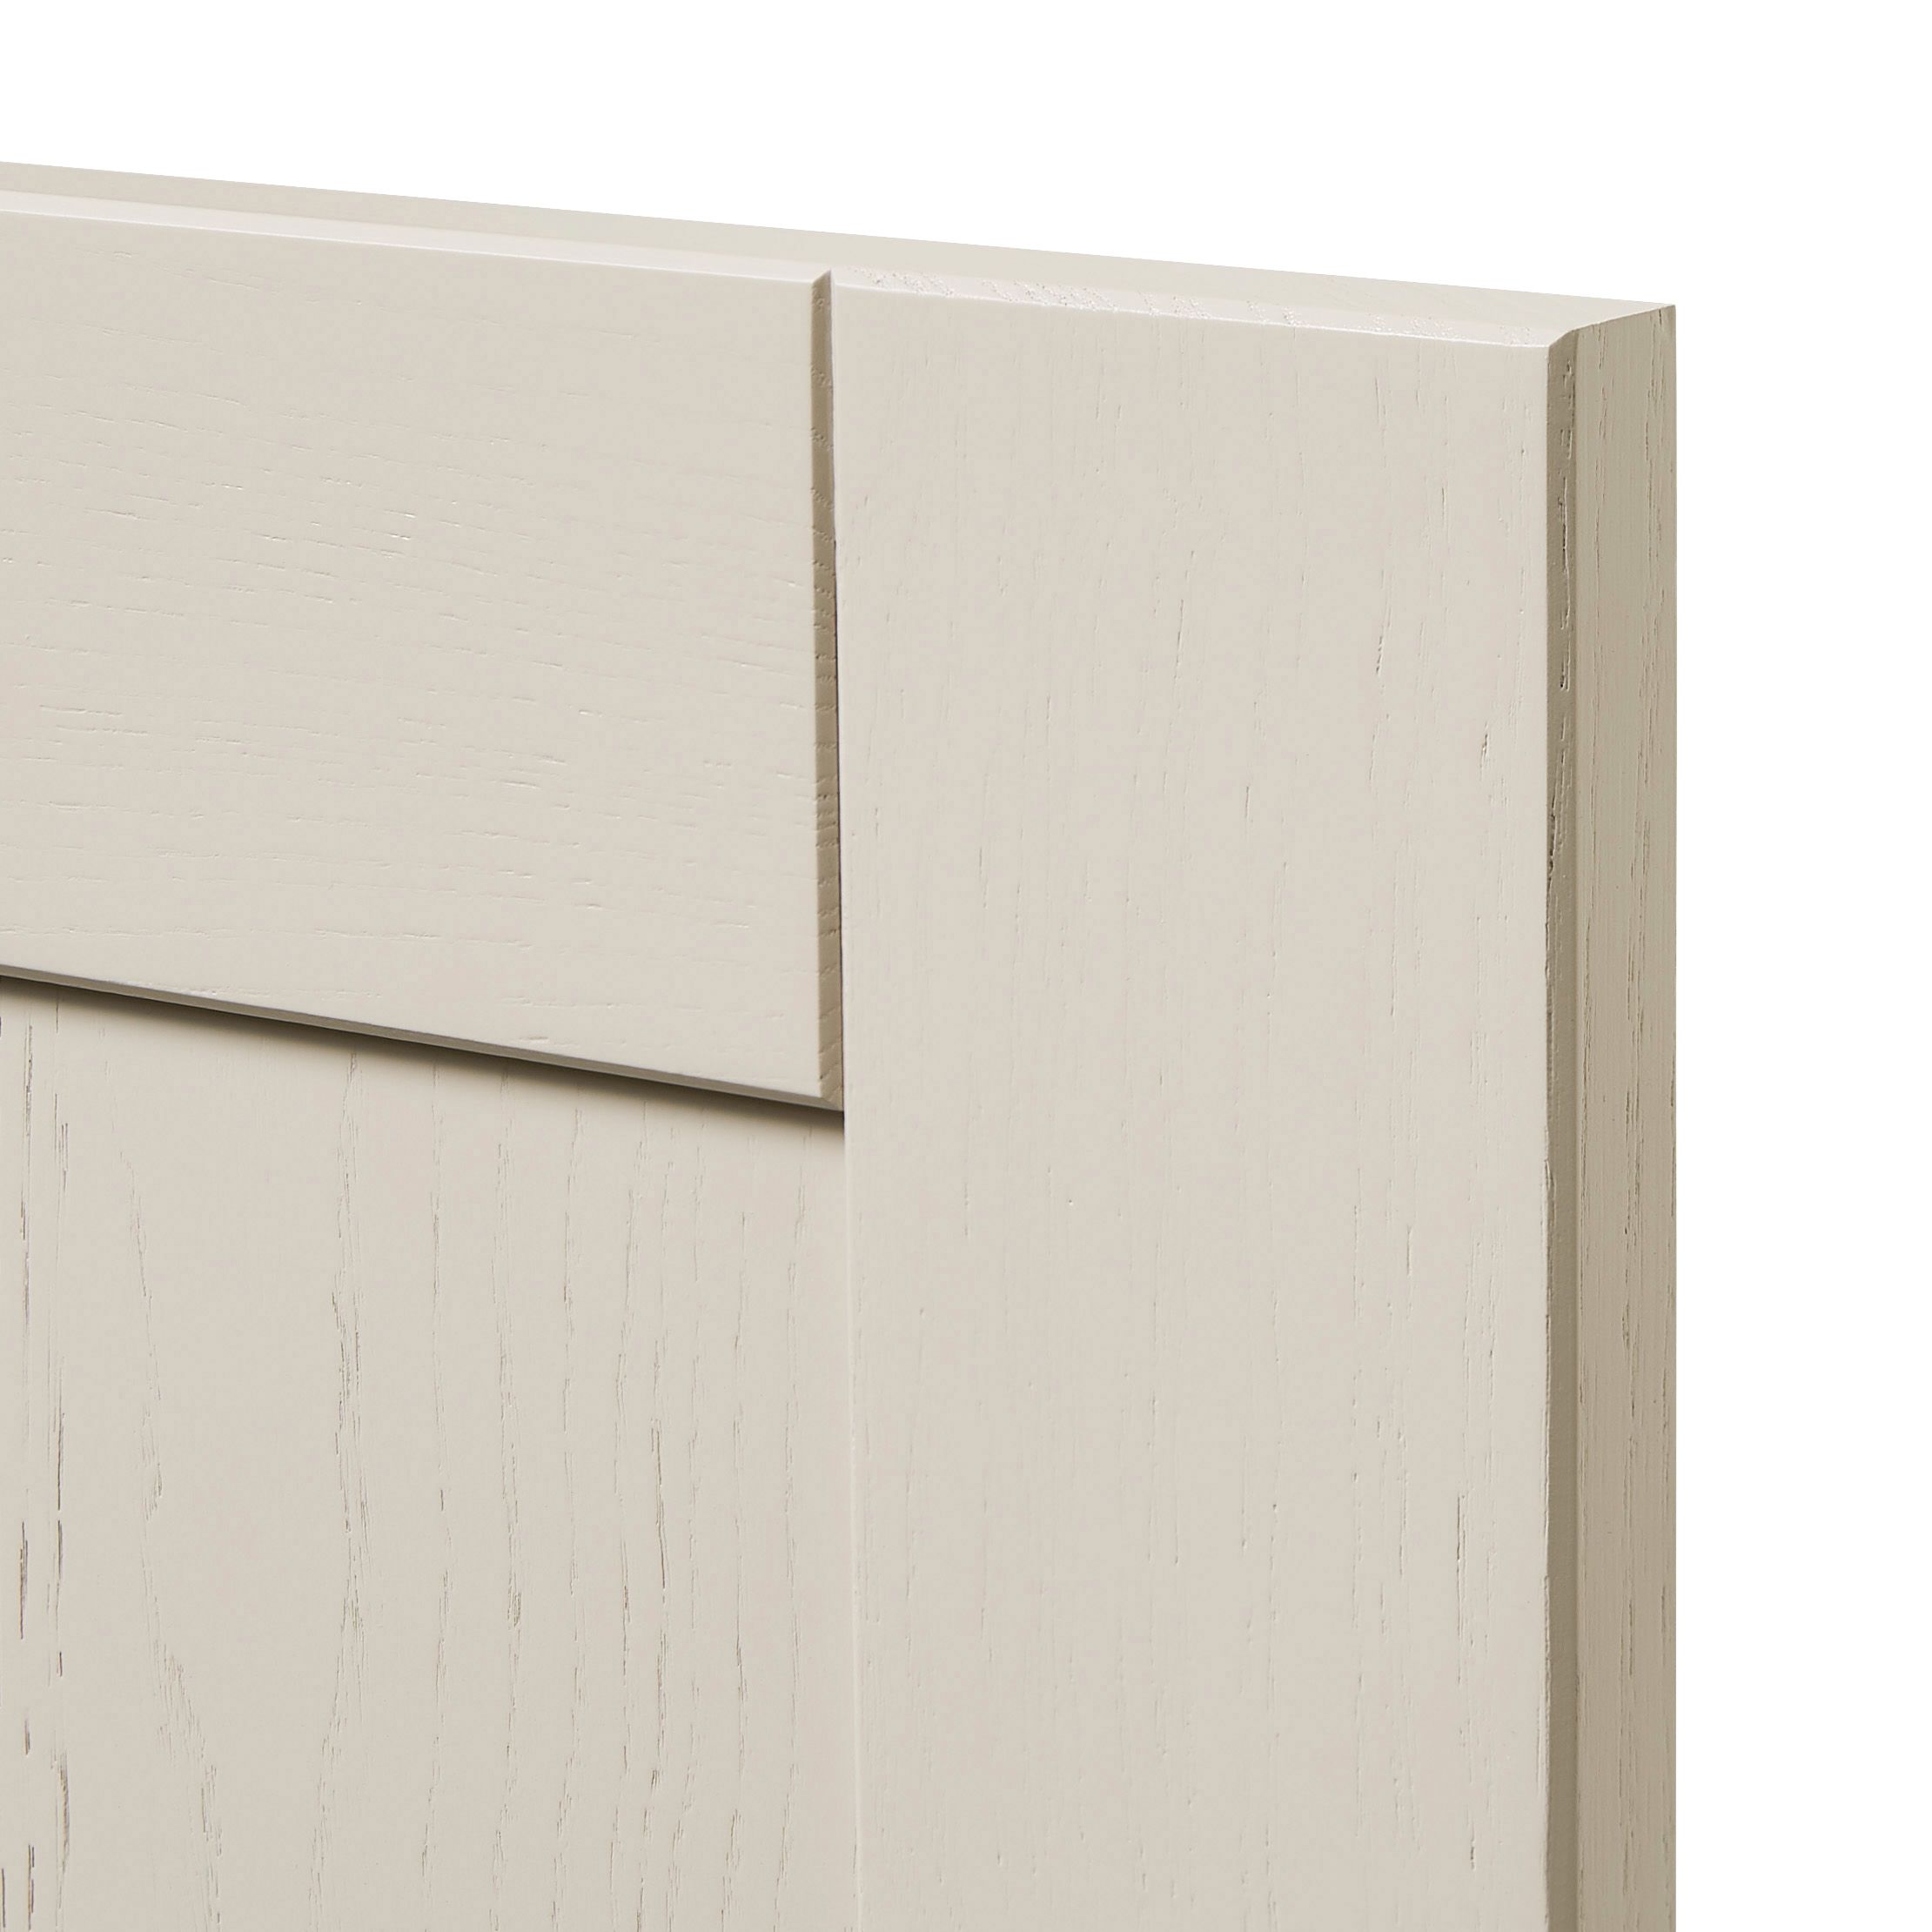 GoodHome Verbena Matt cashmere painted natural ash shaker Highline Cabinet door (W)300mm (H)715mm (T)20mm